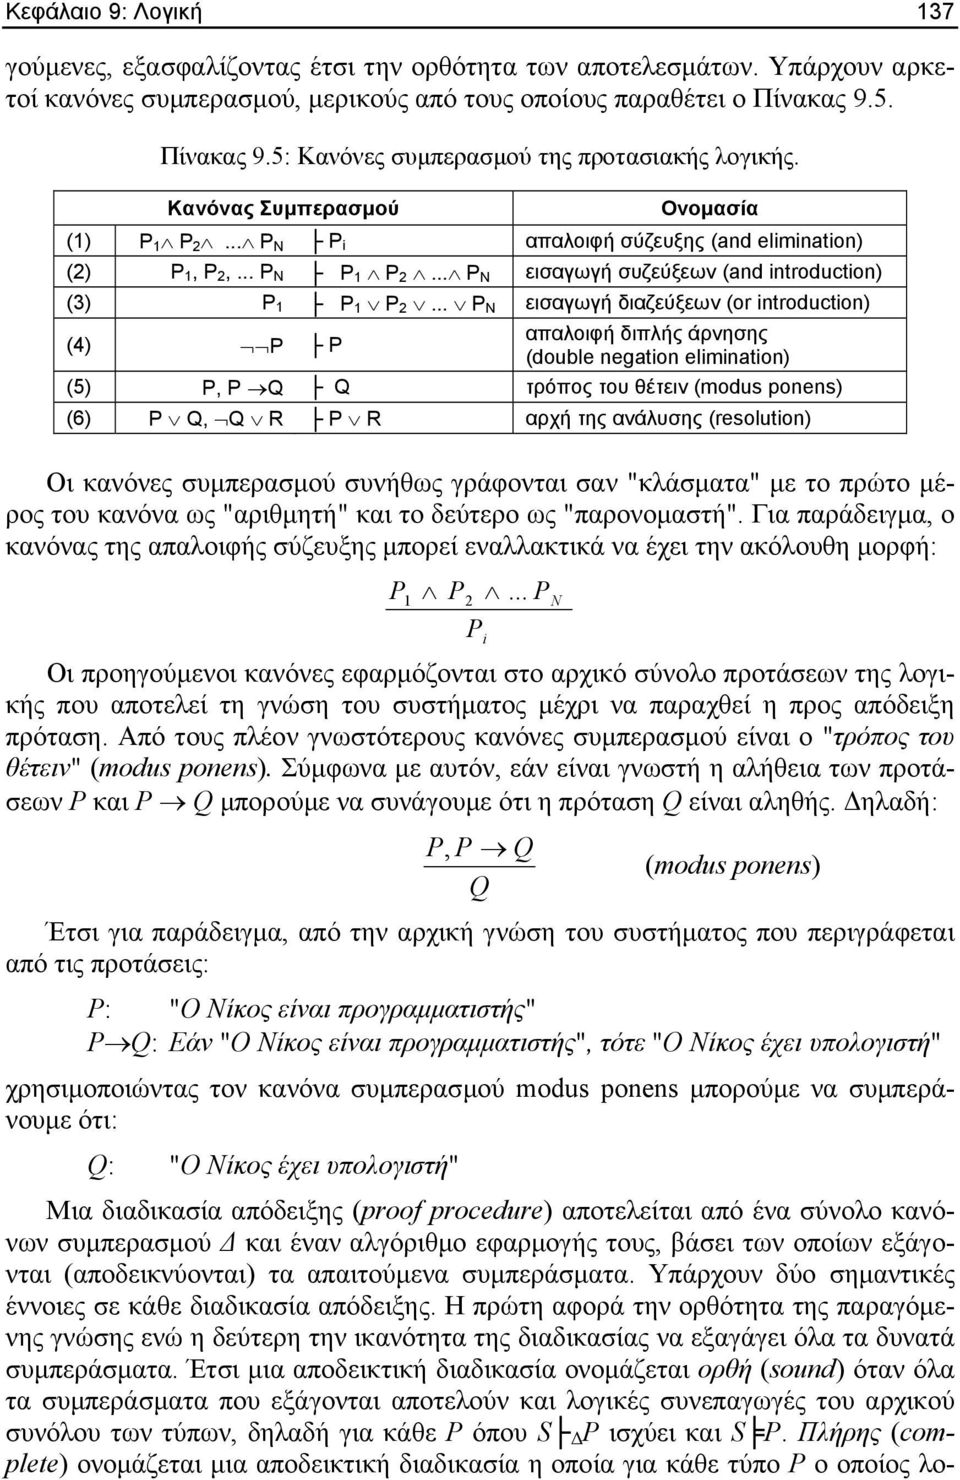 .. P N εισαγωγή συζεύξεων (and introduction) (3) P 1 P 1 P 2.